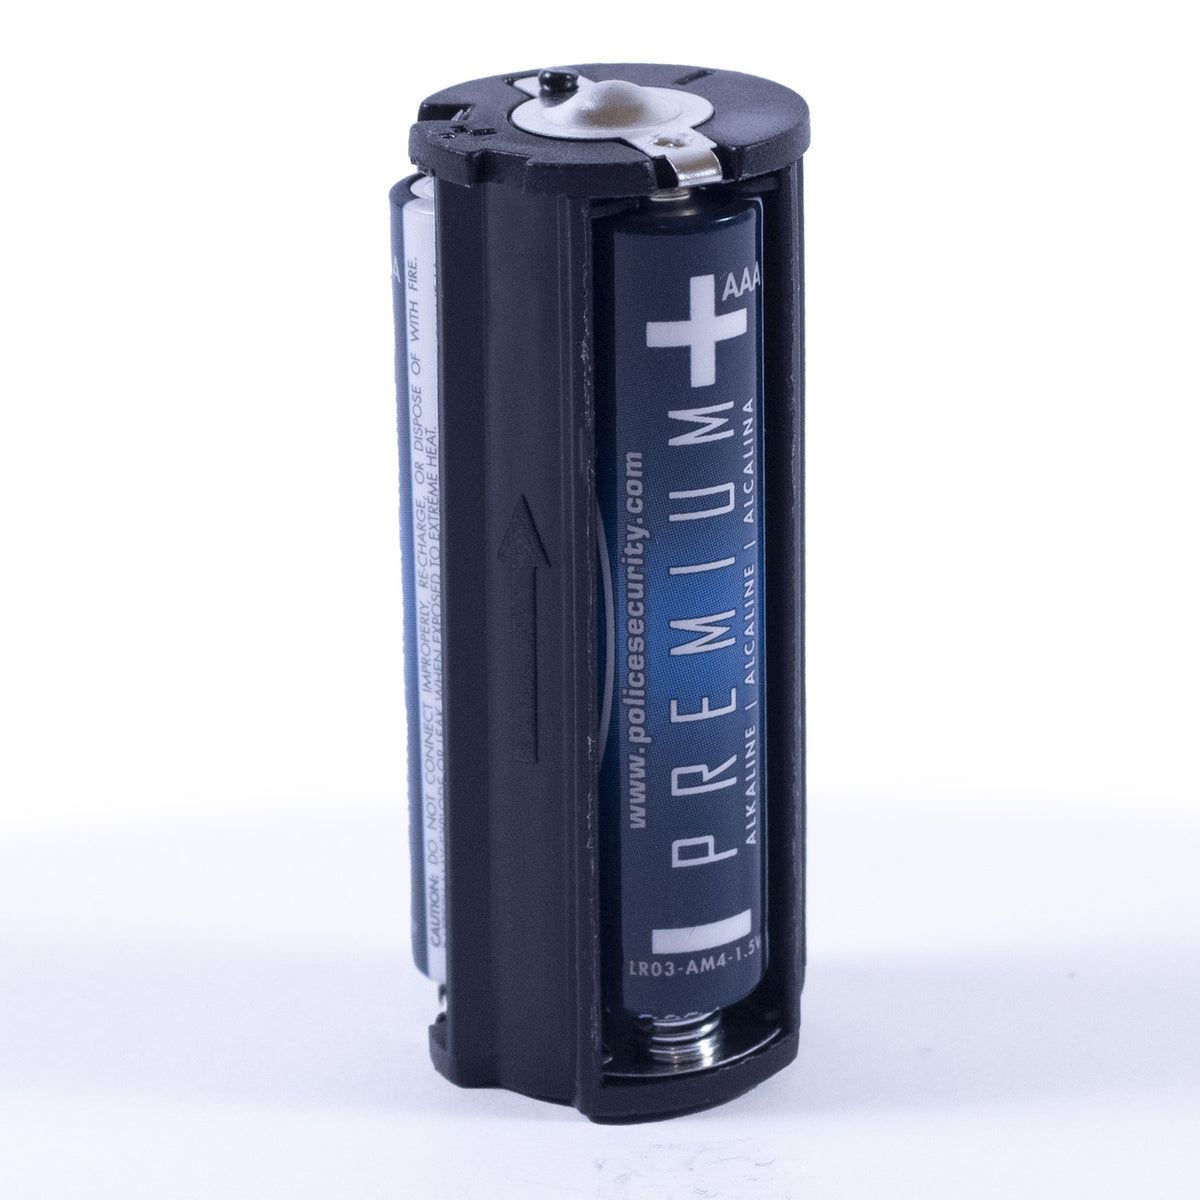 Battery Cartridge 3AAA - Police Security Flashlights